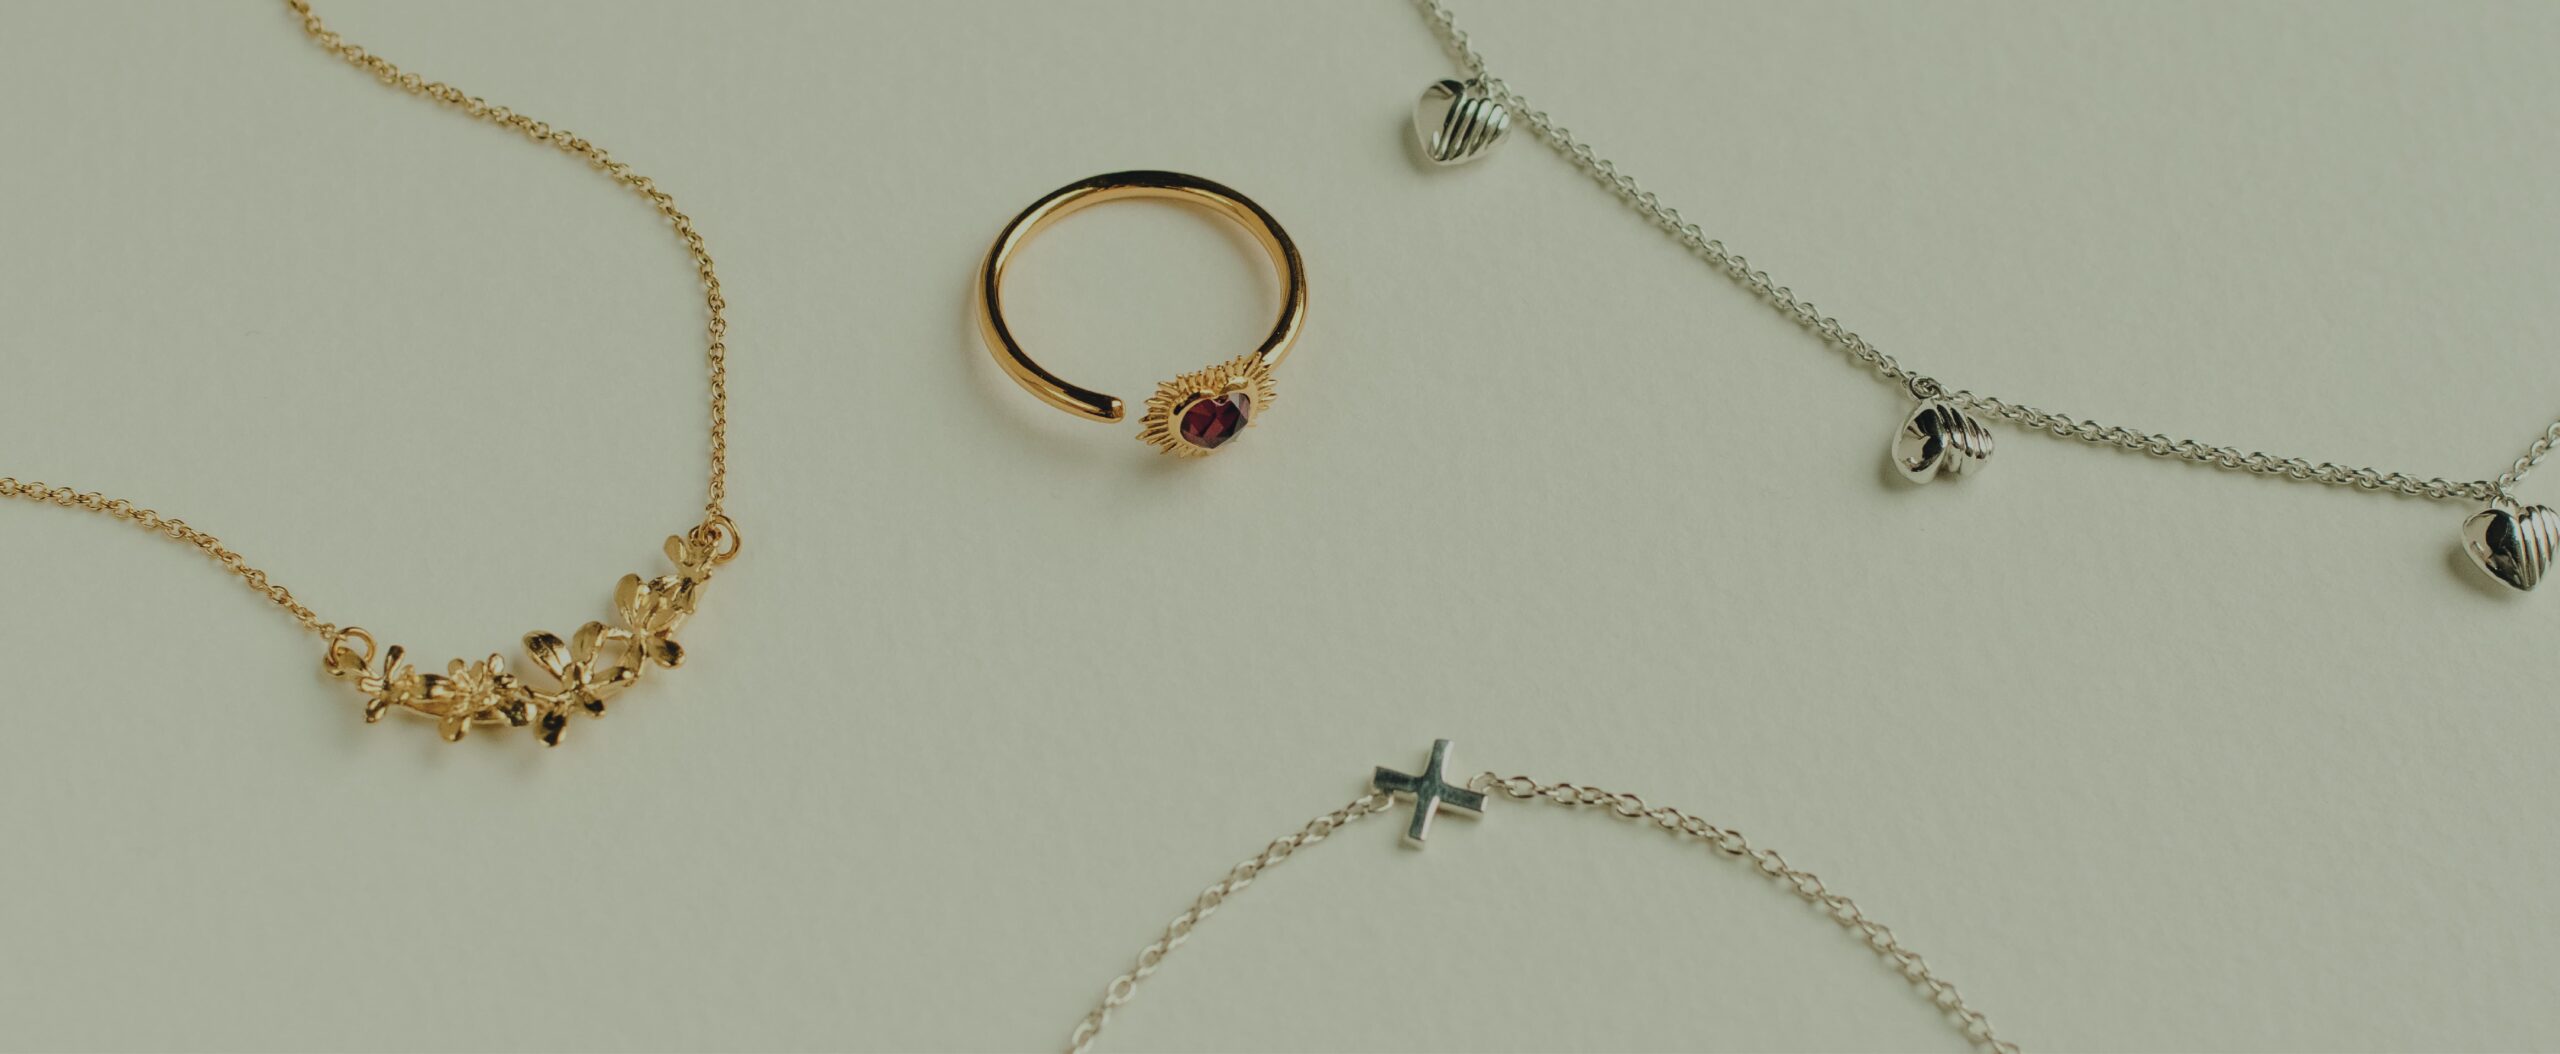 Jewellery Gifts Of Love at Silverado Jewellery